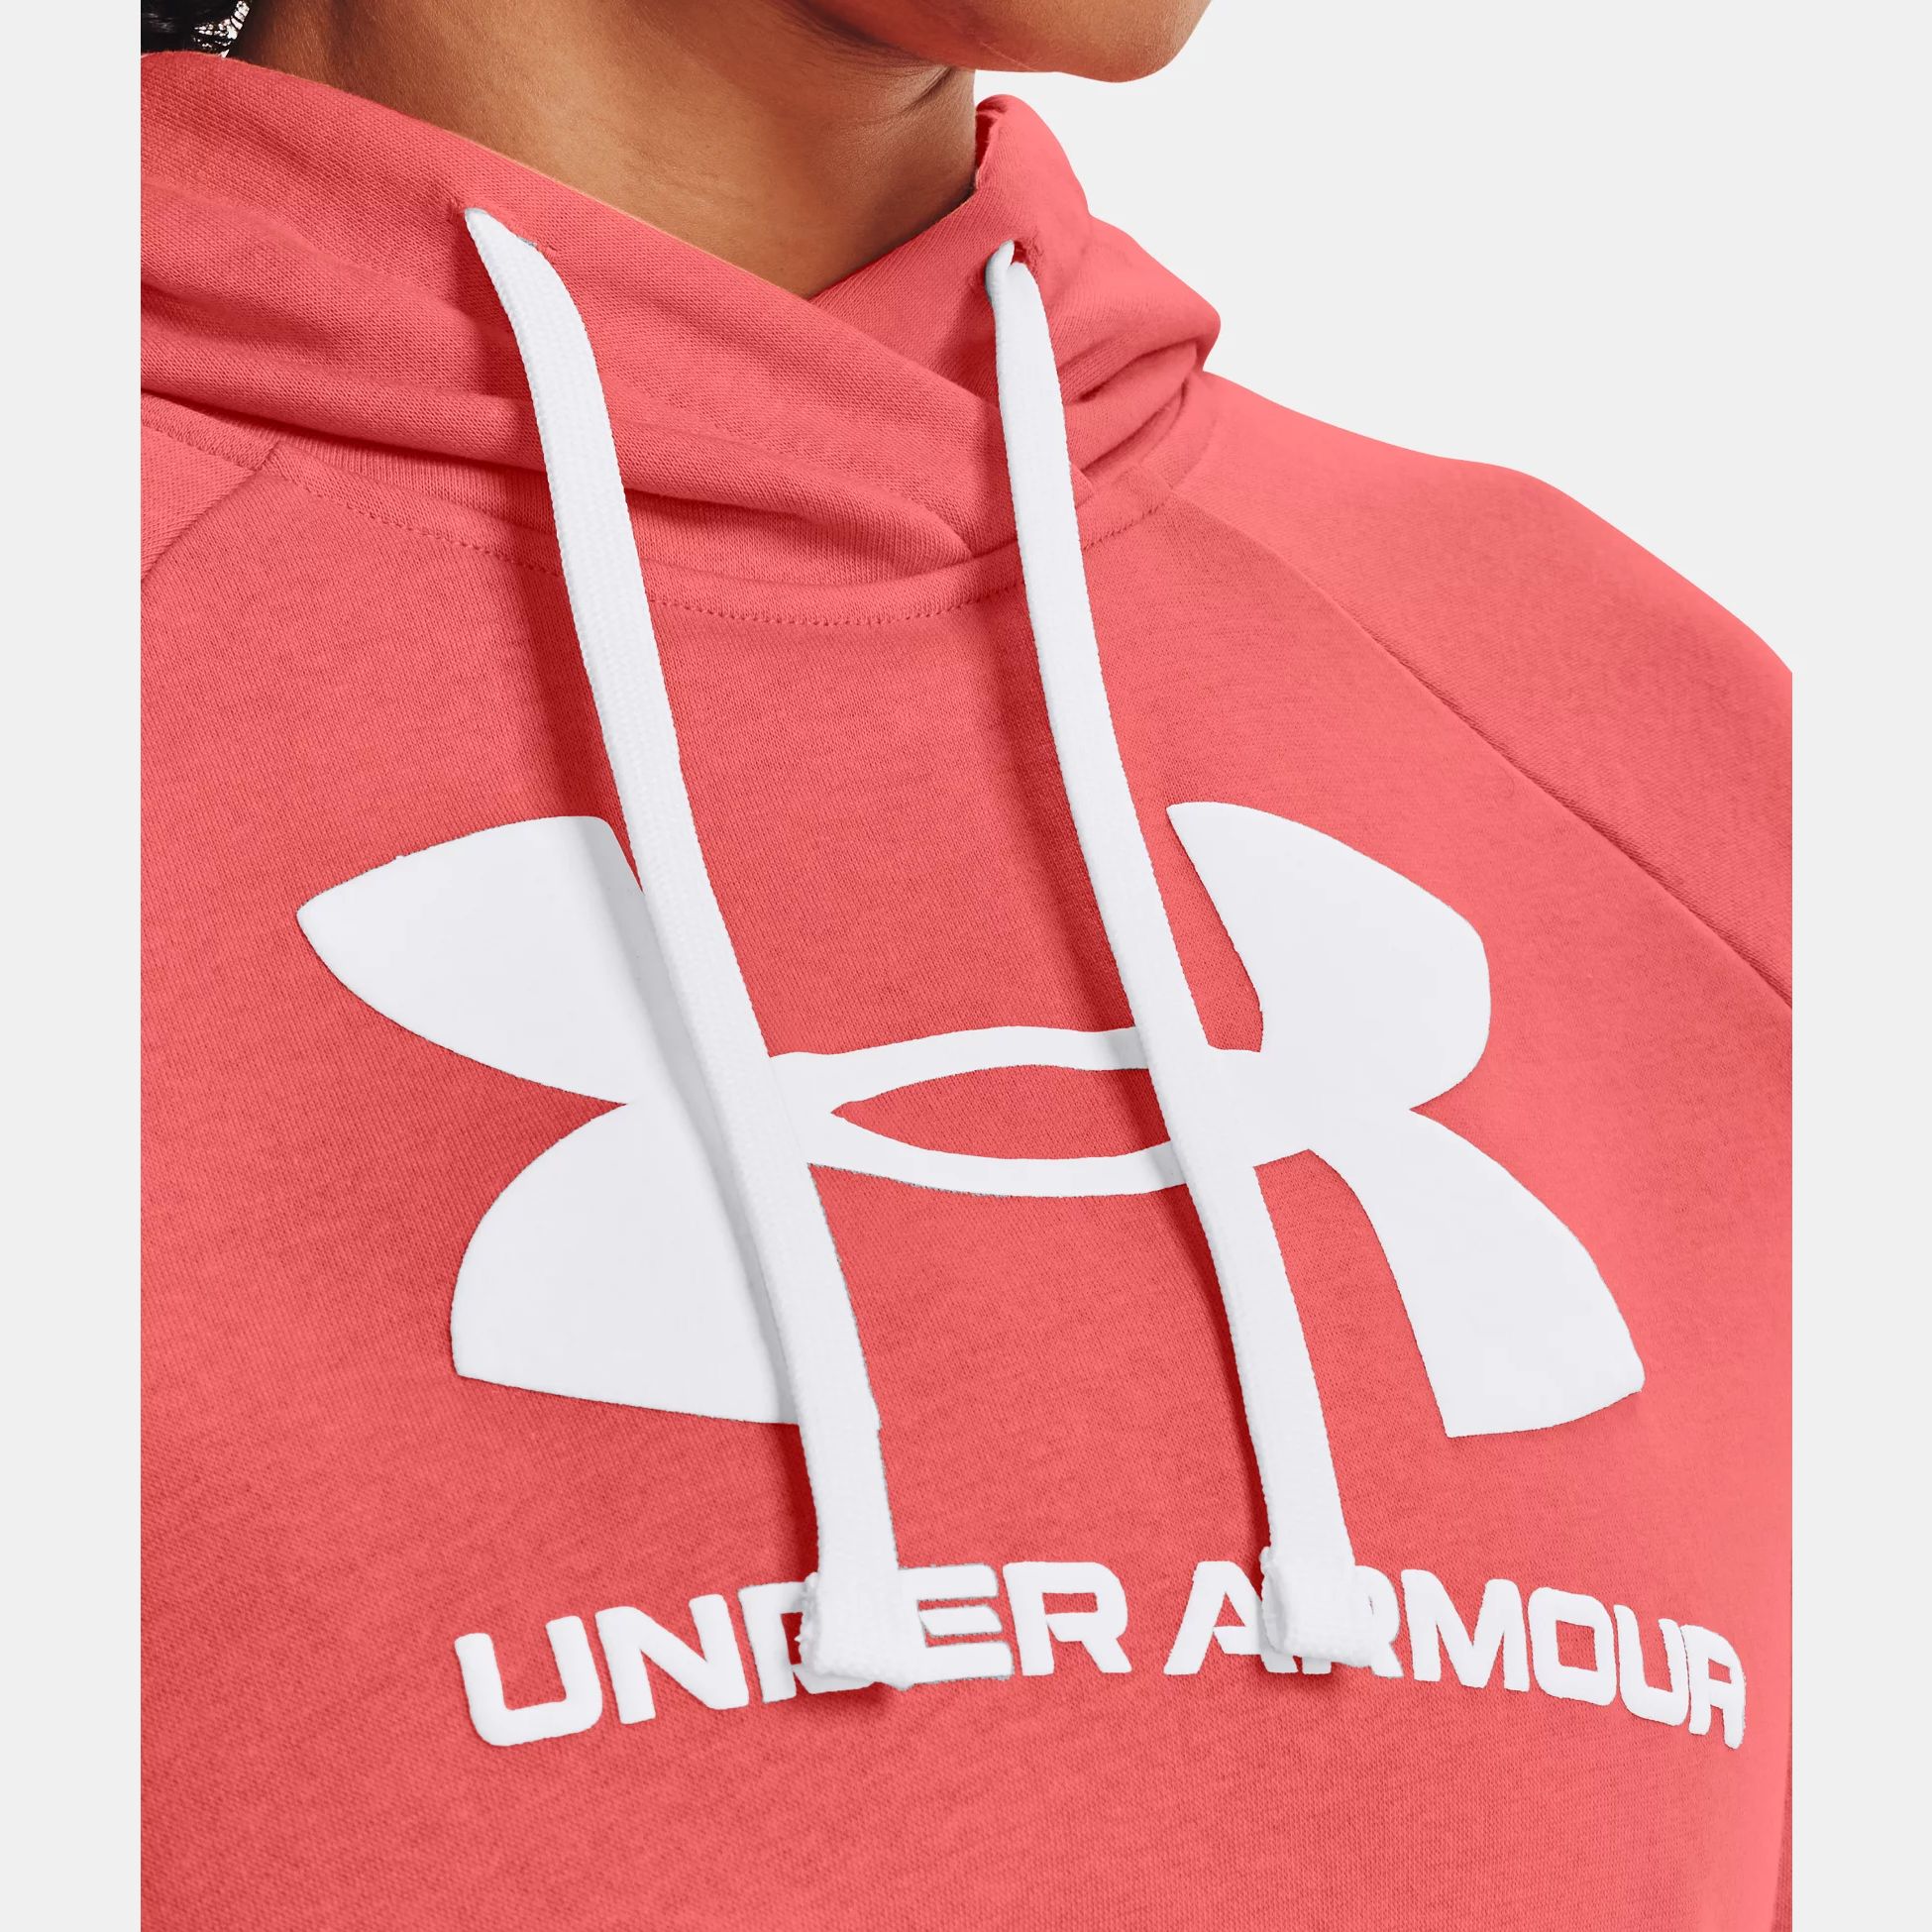 Hoodies -  under armour UA Rival Fleece Logo Hoodie